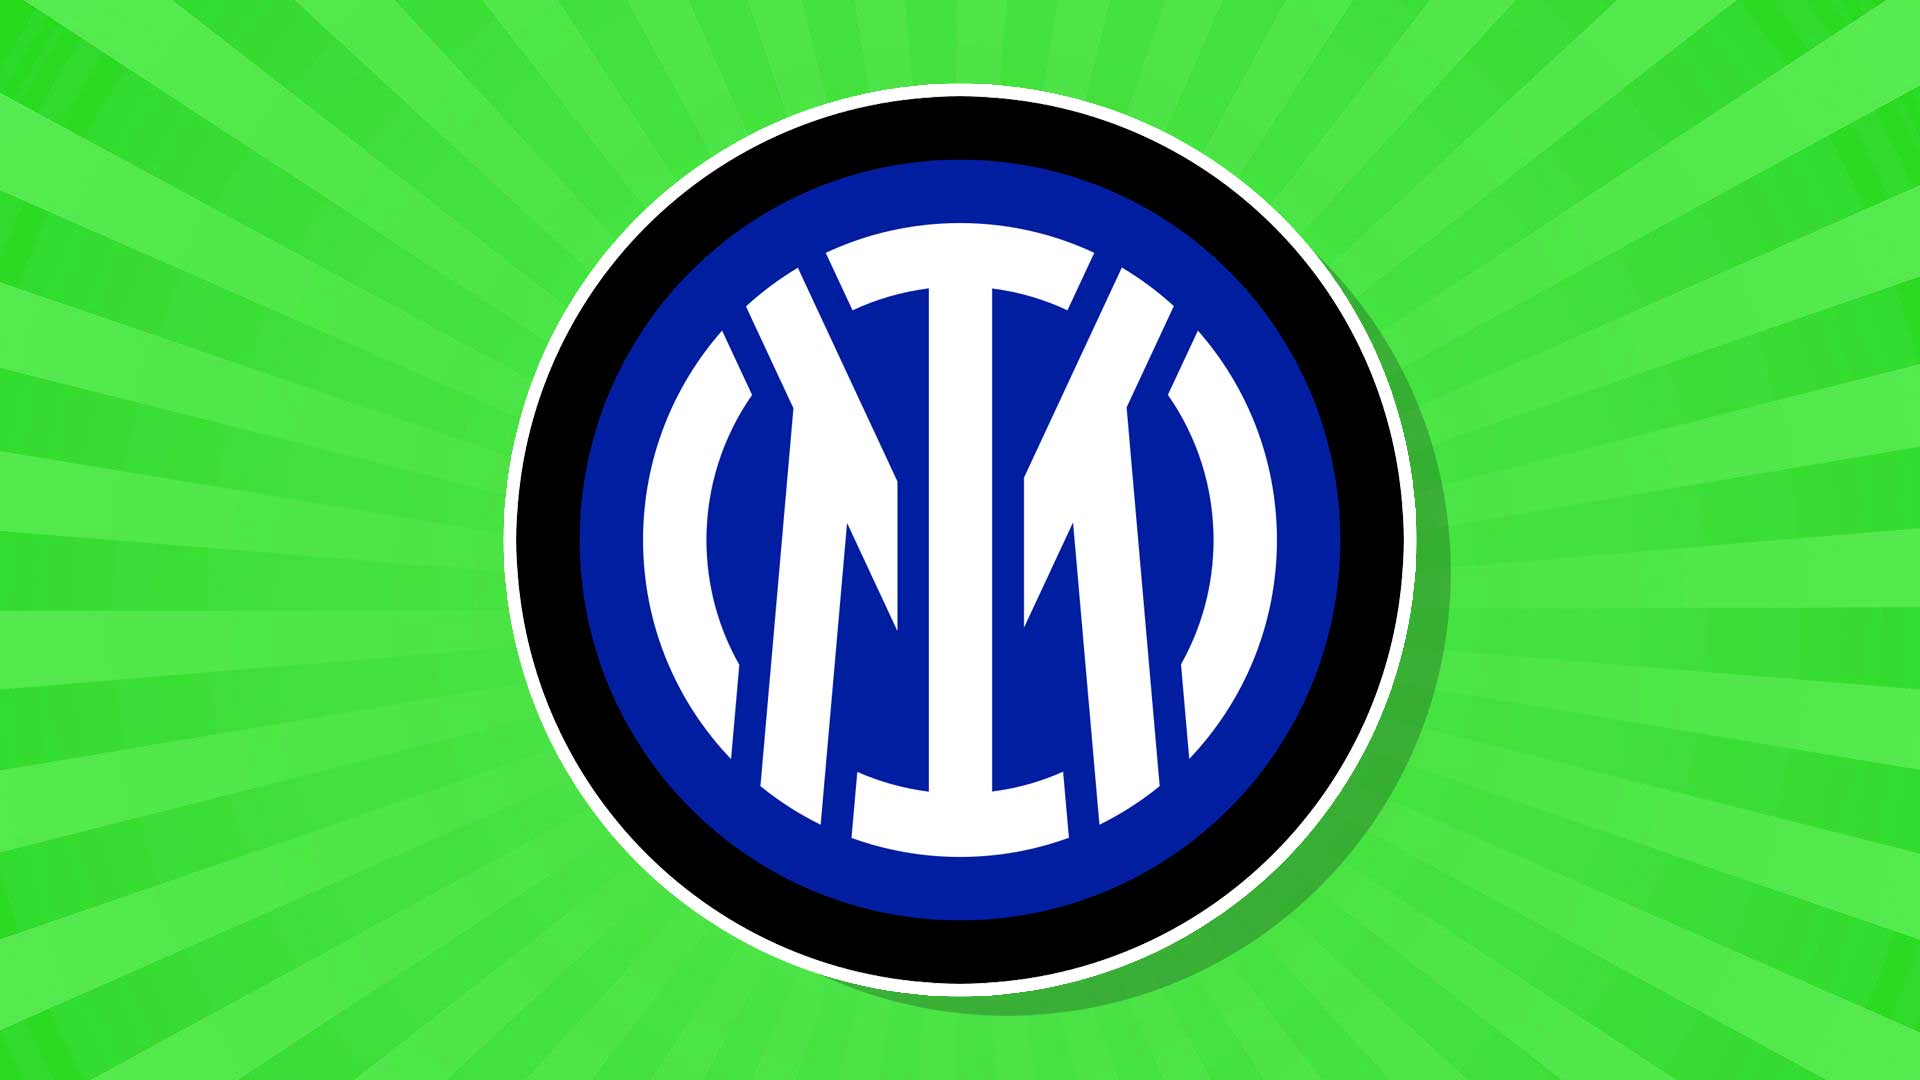 Inter Milan football badge